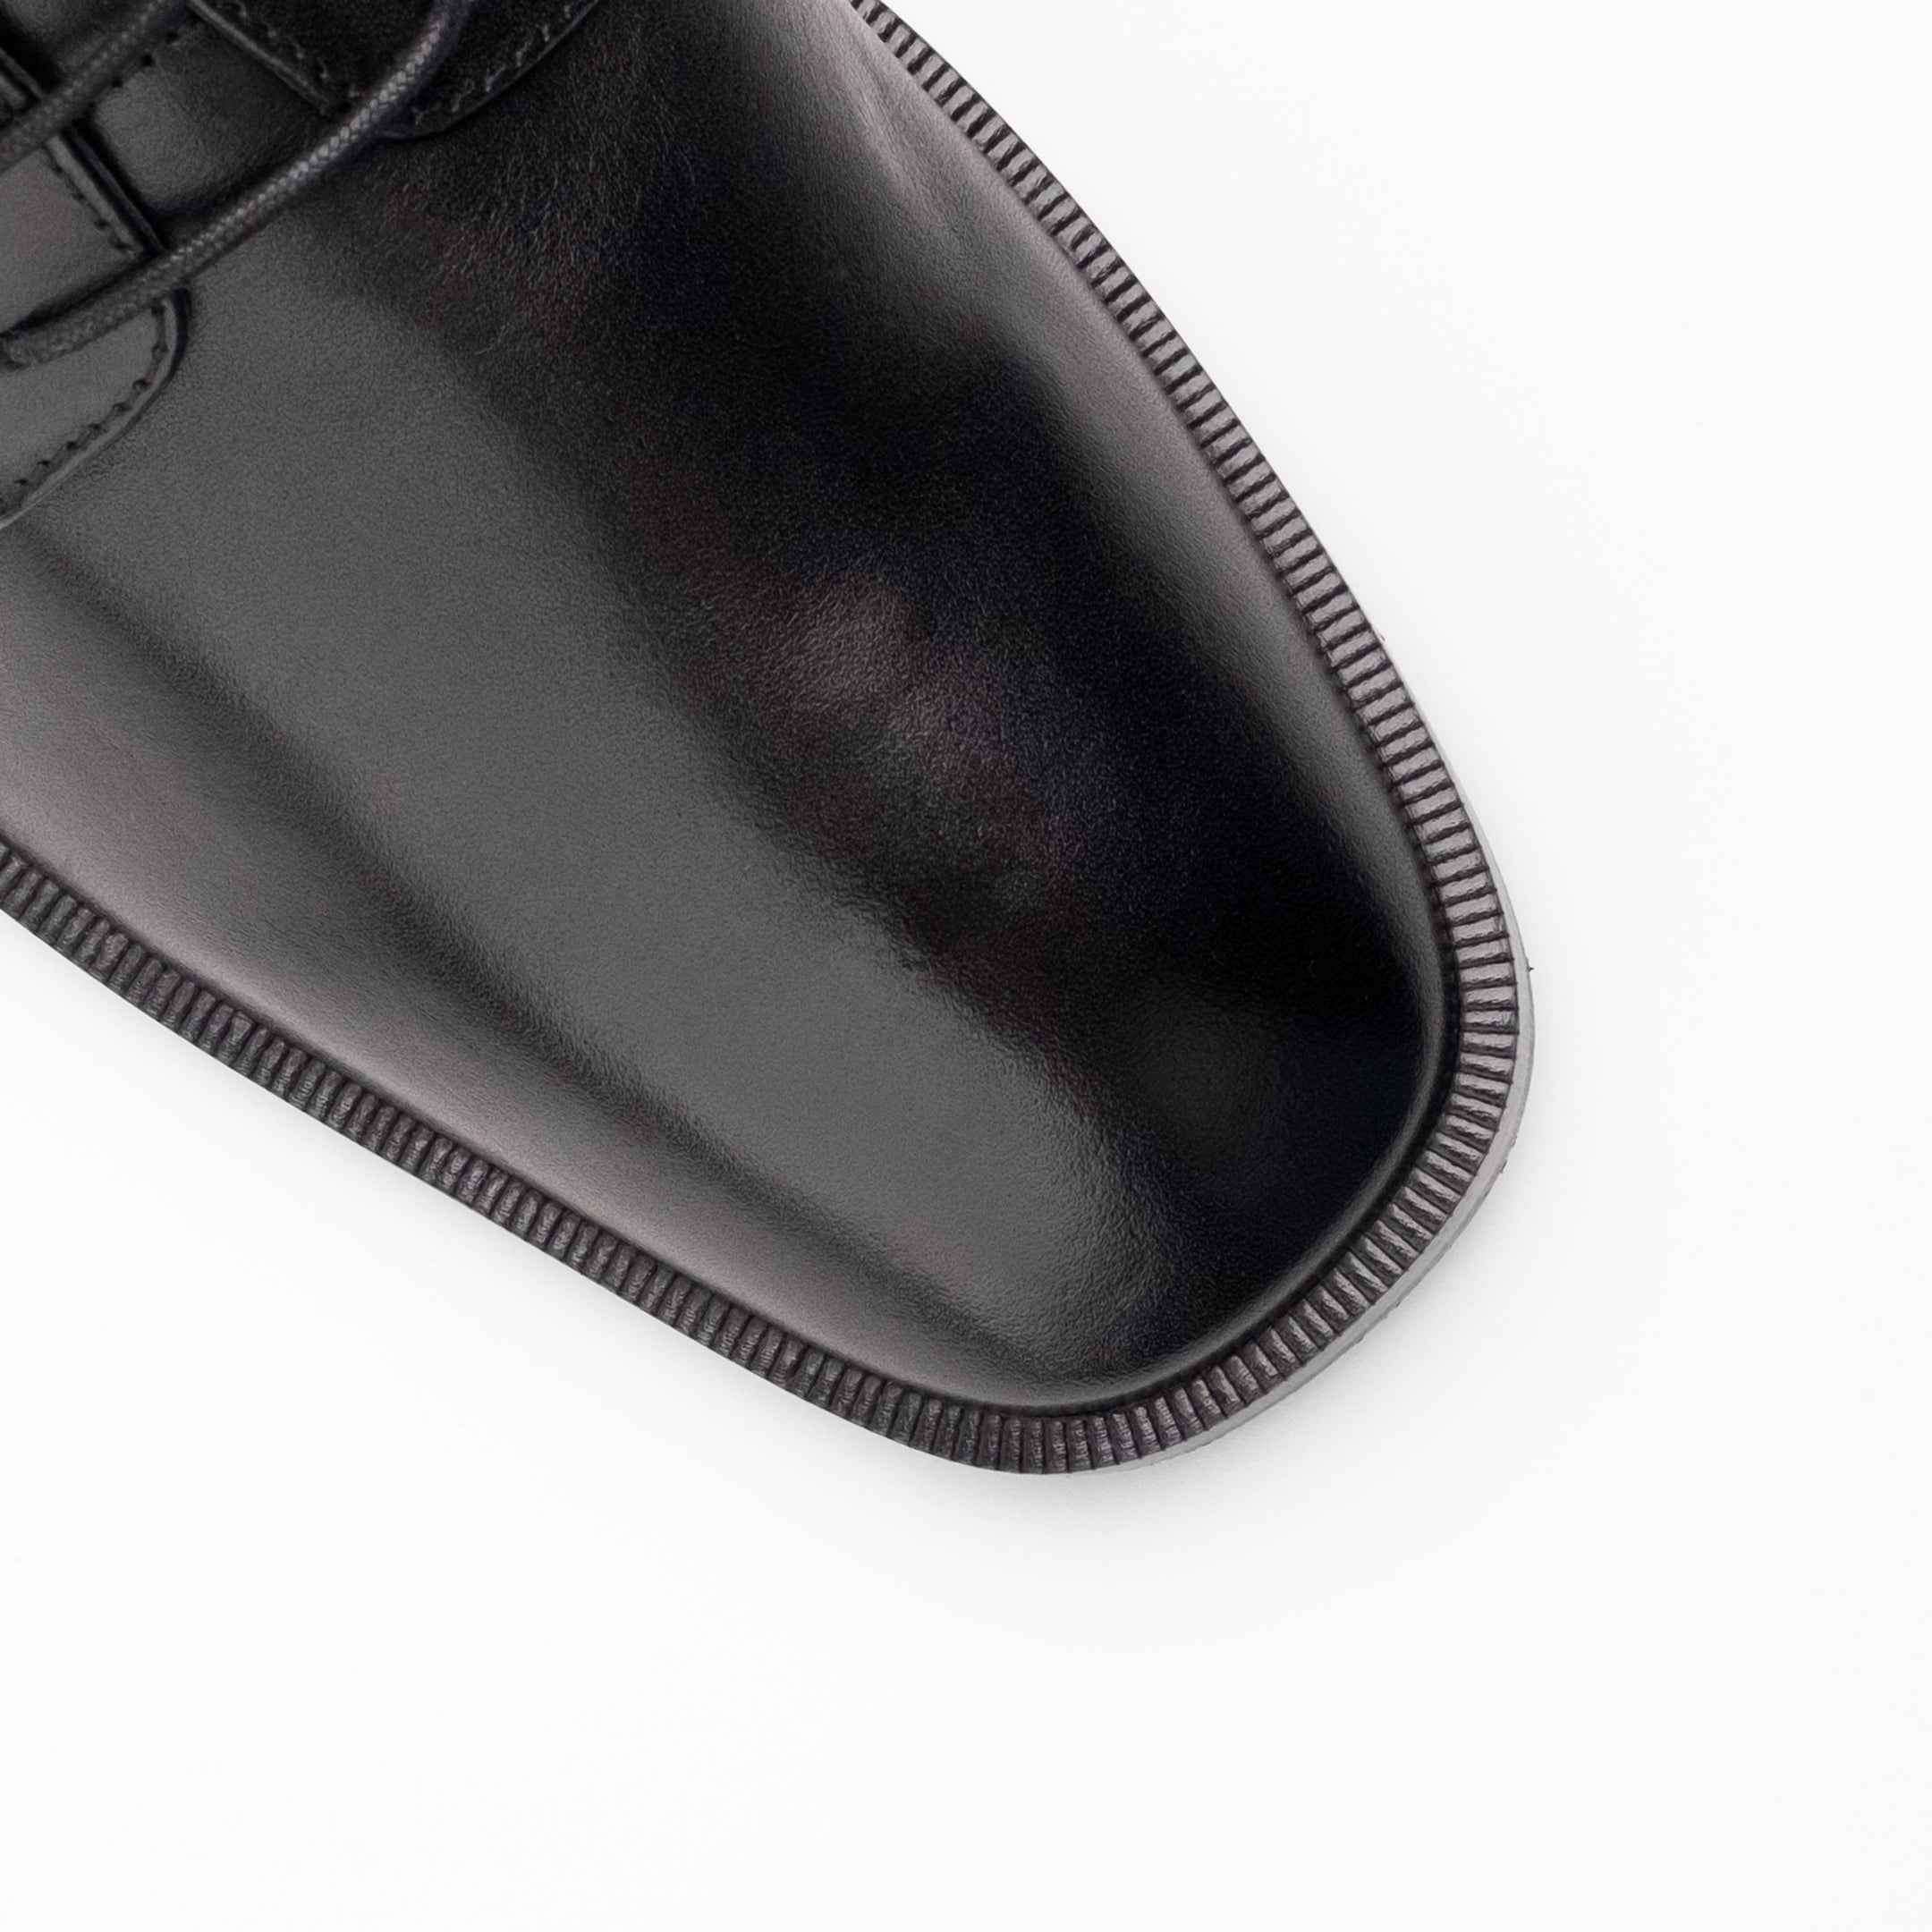 Walk London Alex Derby Shoe - Black Leather